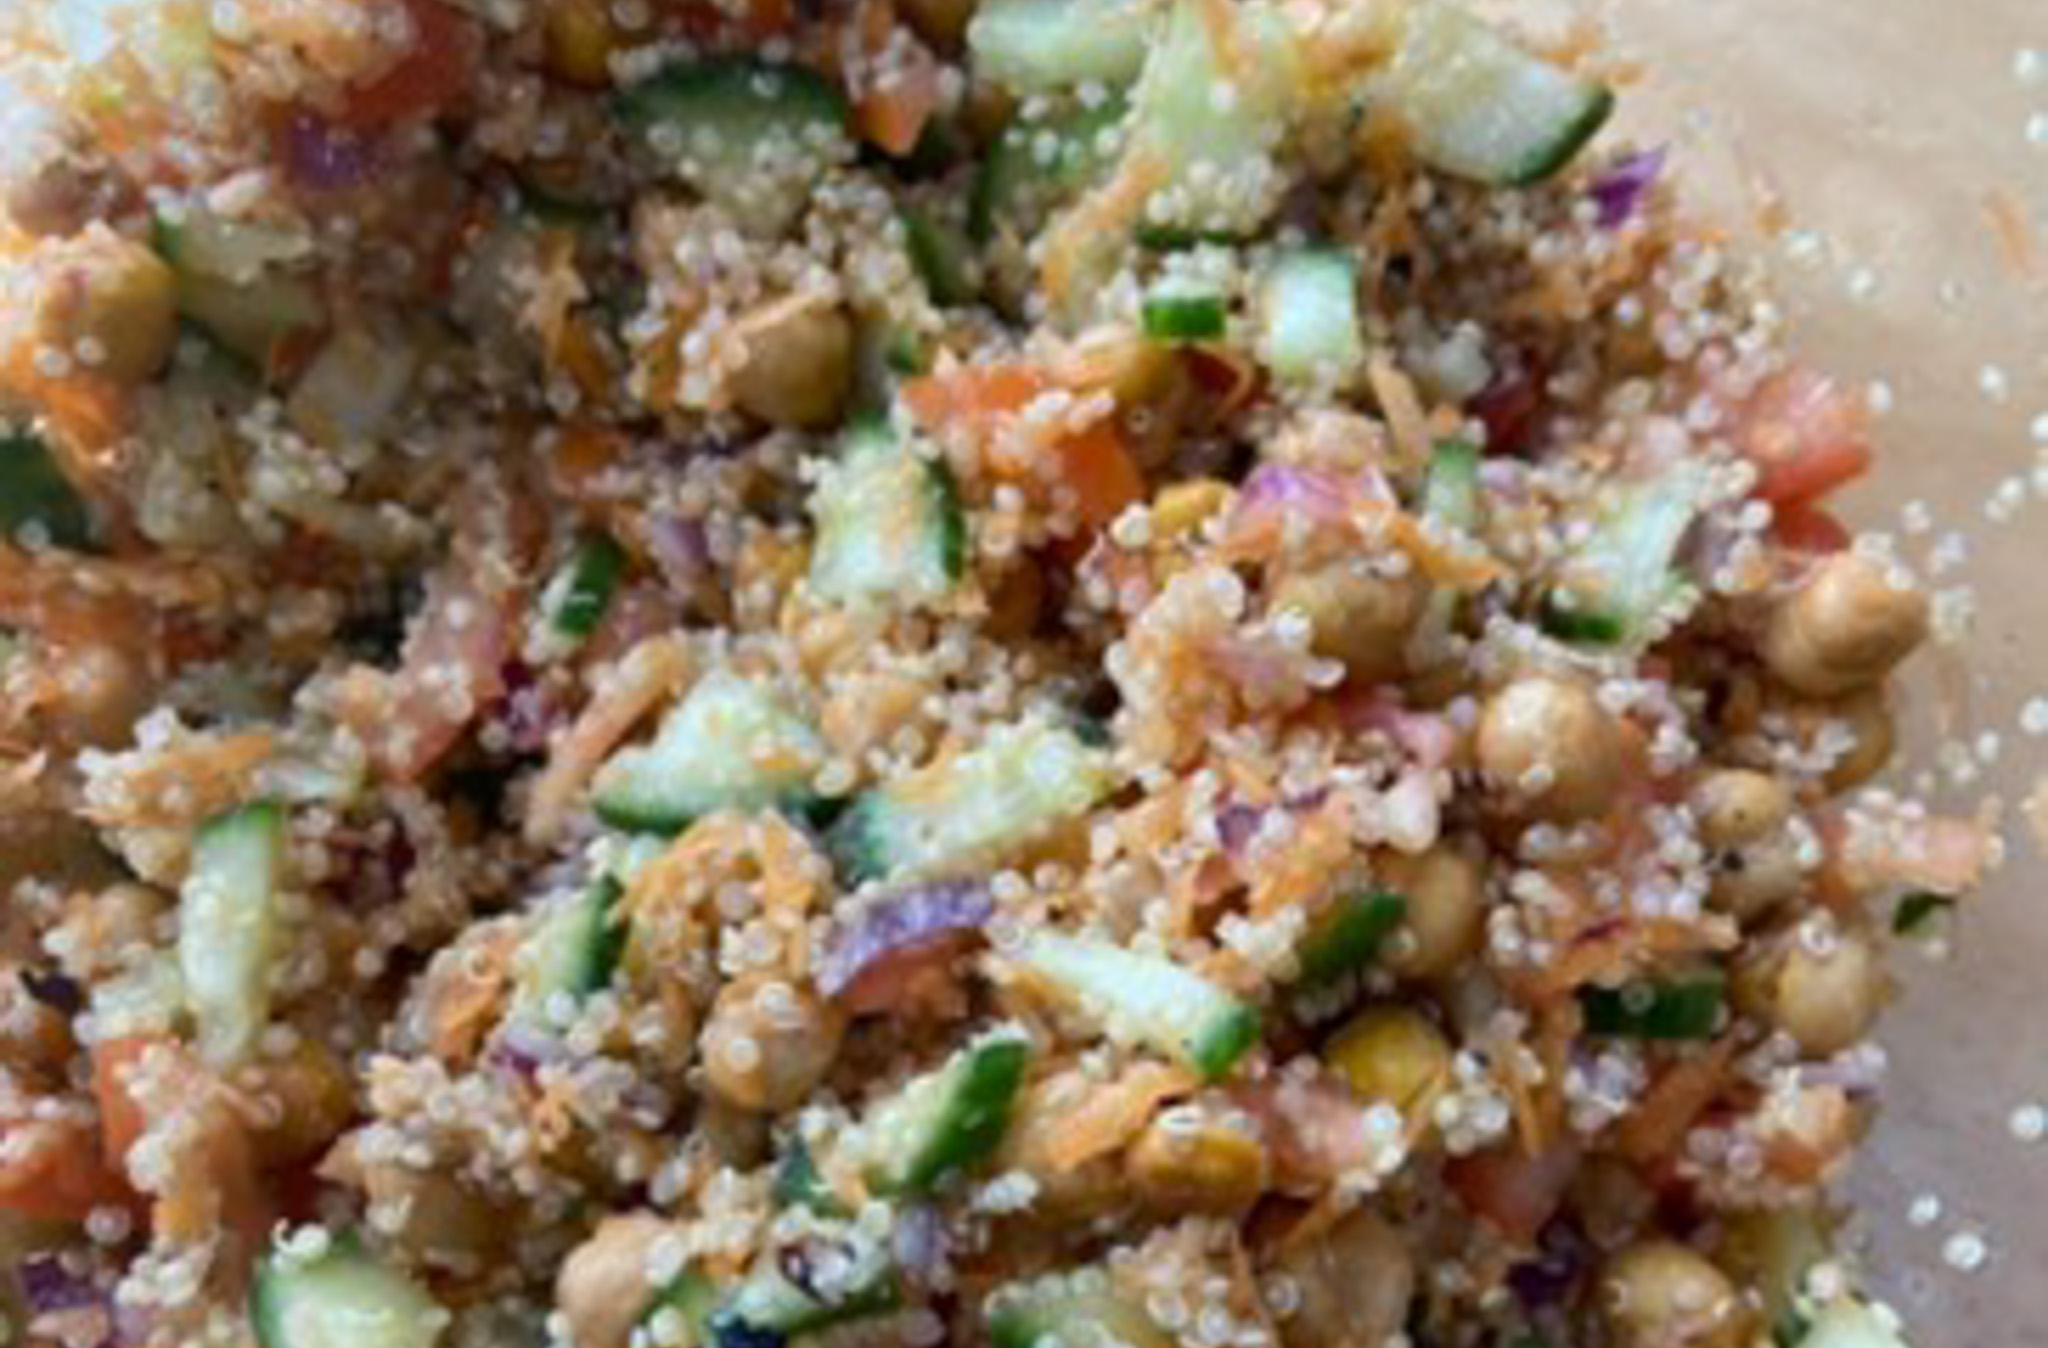 Roasted chickpea and quinoa salad